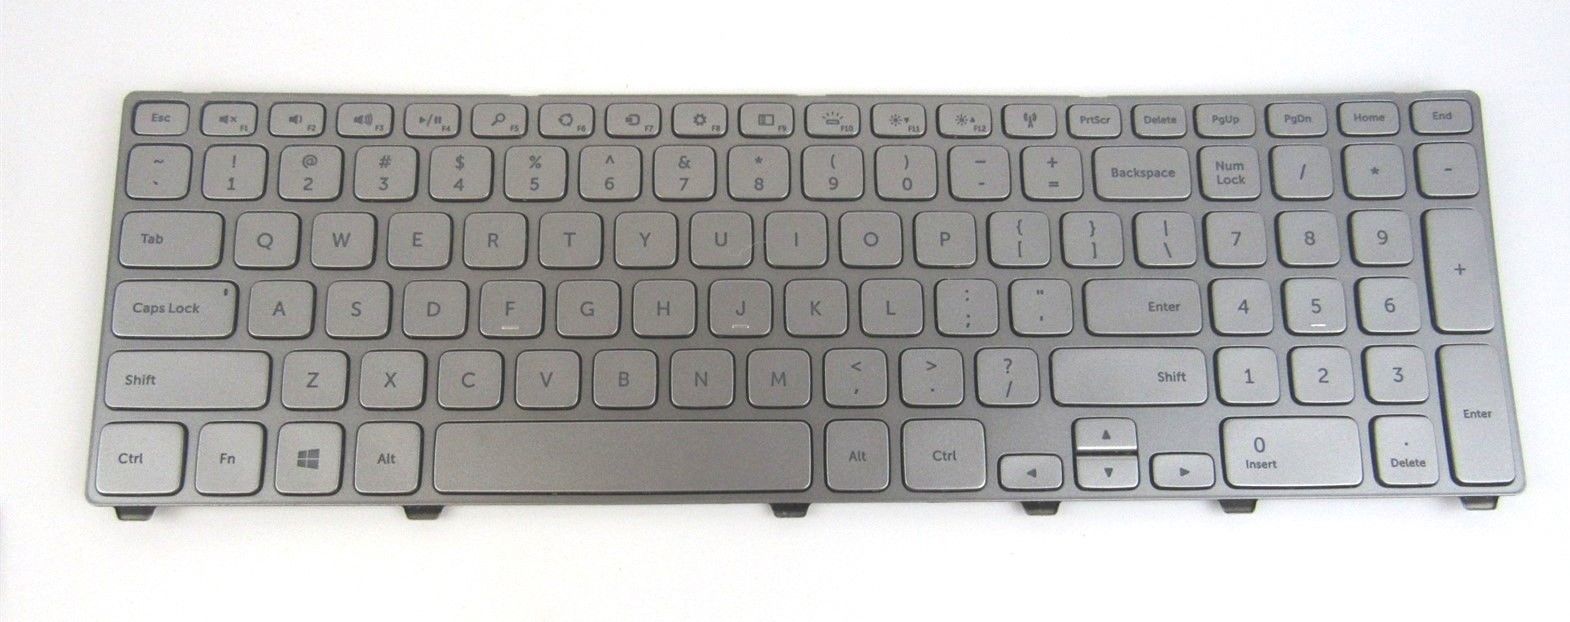 Dell-Keyboard-KEYDL04301A-Dell-KEYDL04301A-KEYDL04301A-Laptop Keyboards | LaptopSA.co.za a division of the notebook company 